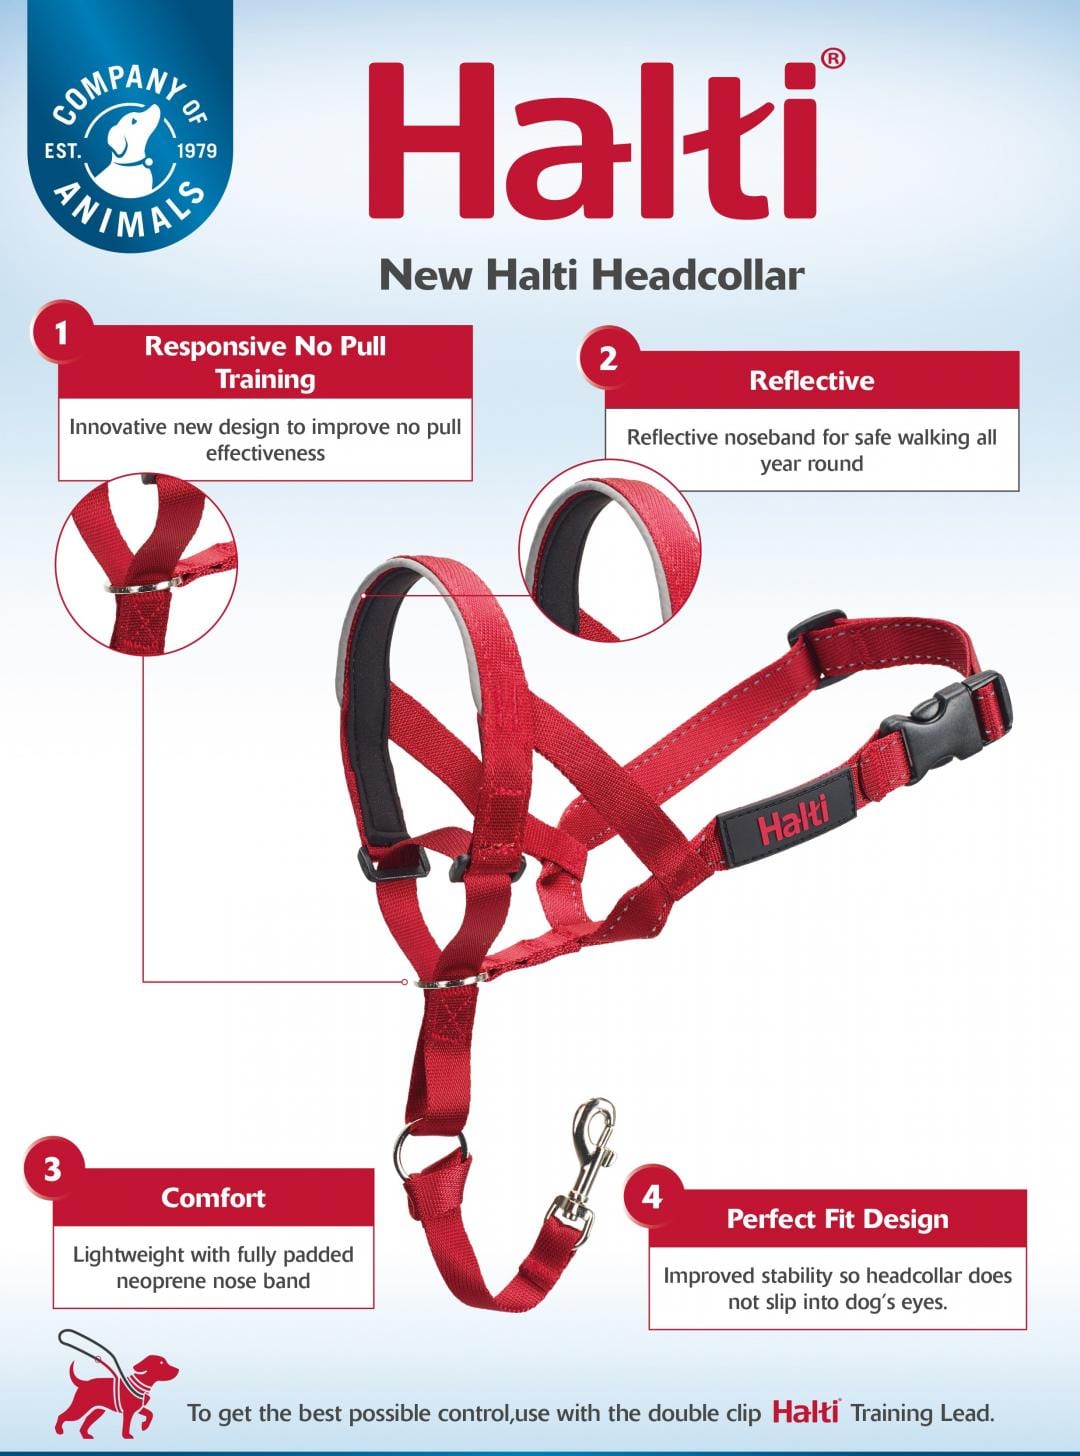 6 Halti Headcollar New 2019 Flyer Features and Benefits